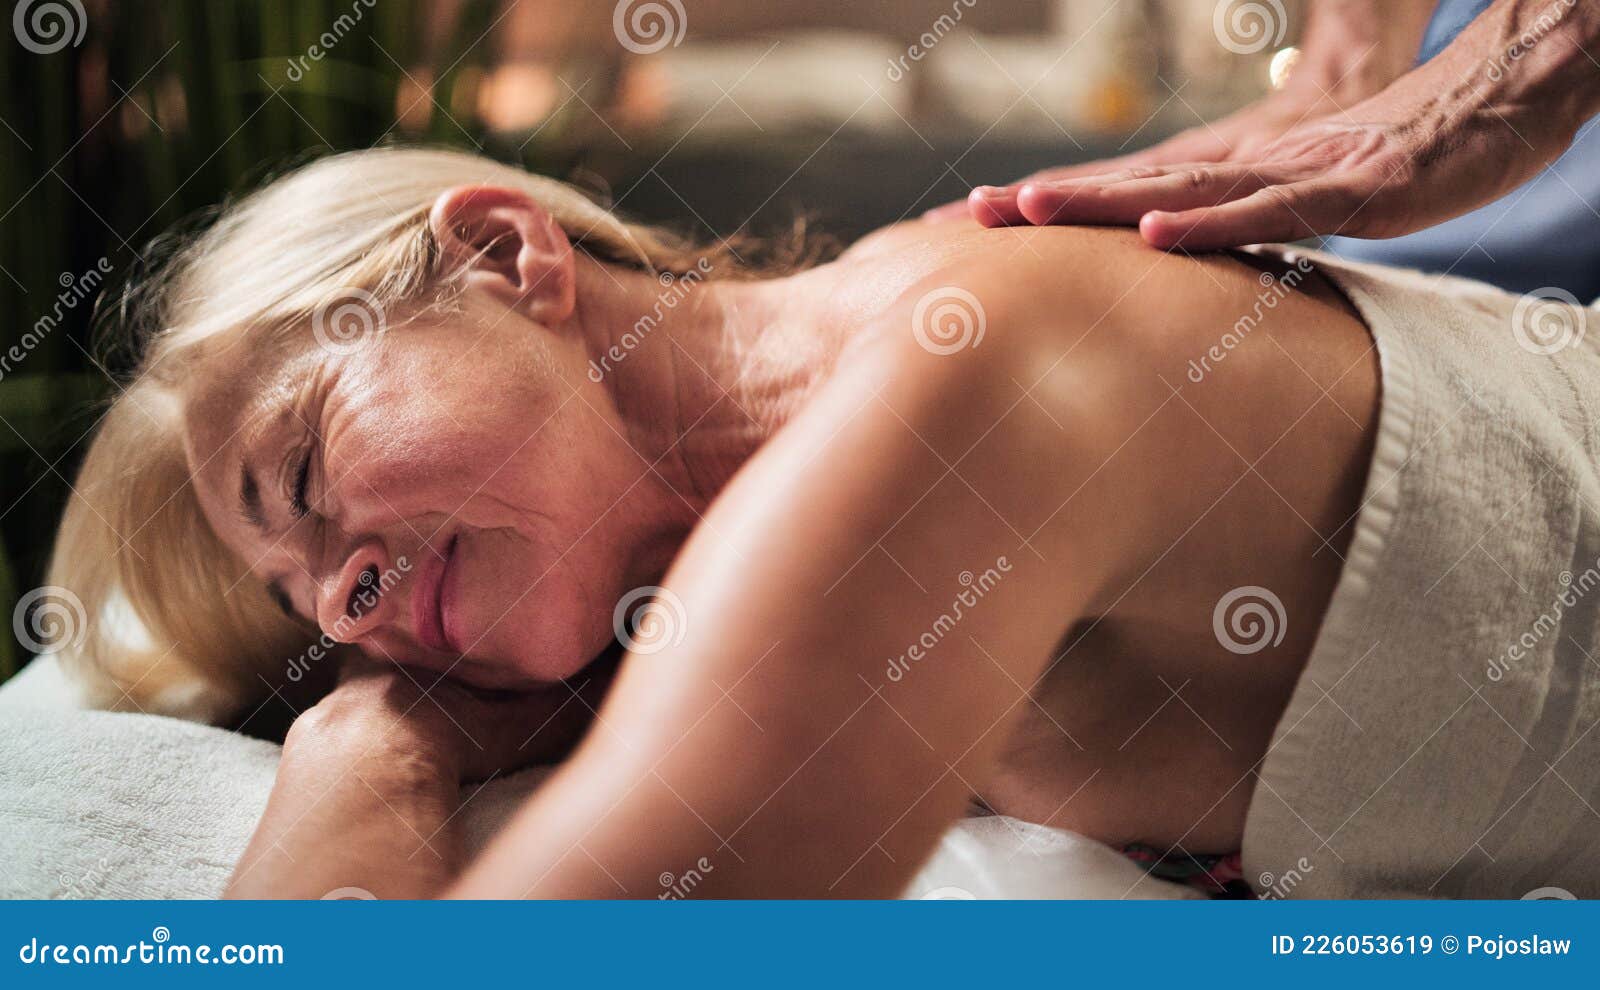 Hot Mature Massage